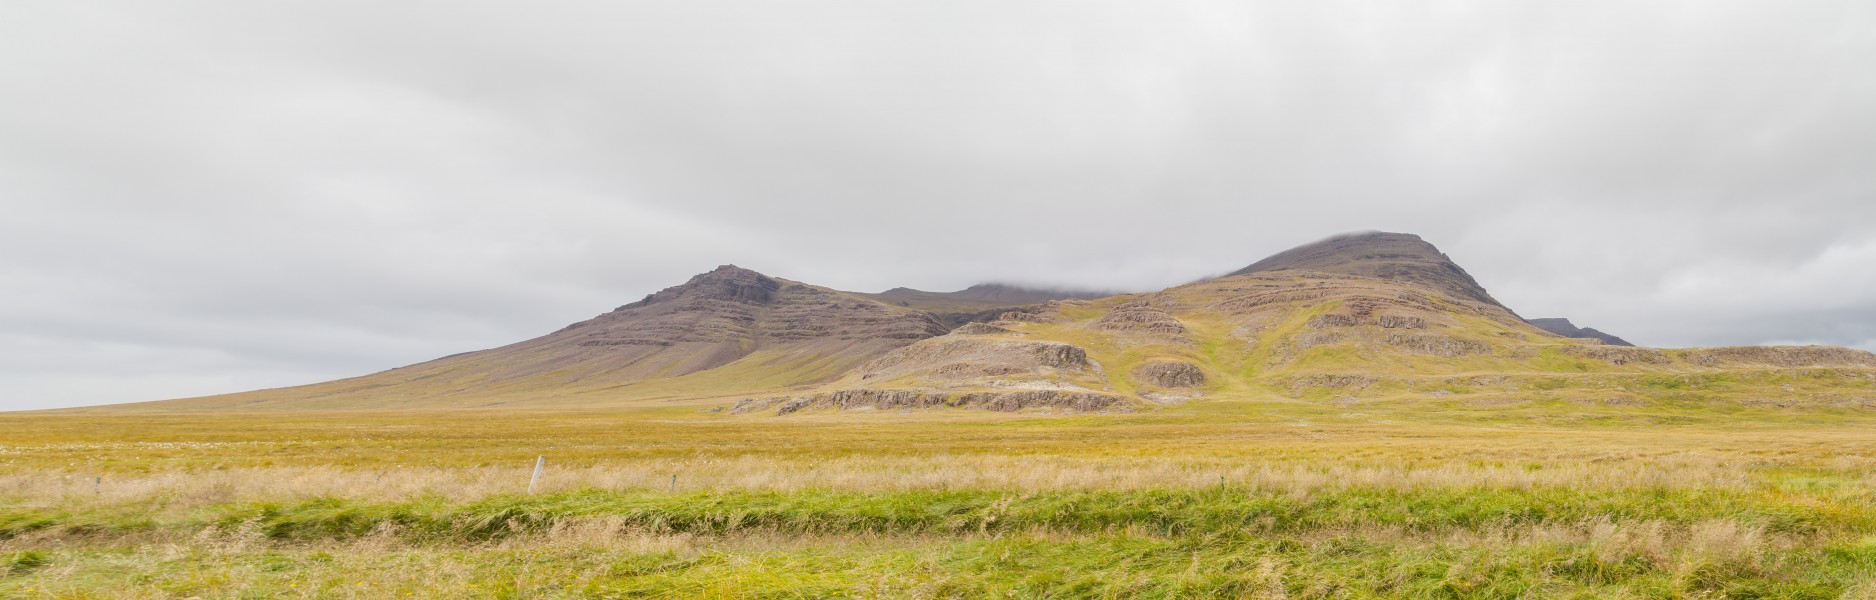 Montaña en Hnappadalur, Vesturland, Islandia, 2014-08-14, DD 034-035 PAN